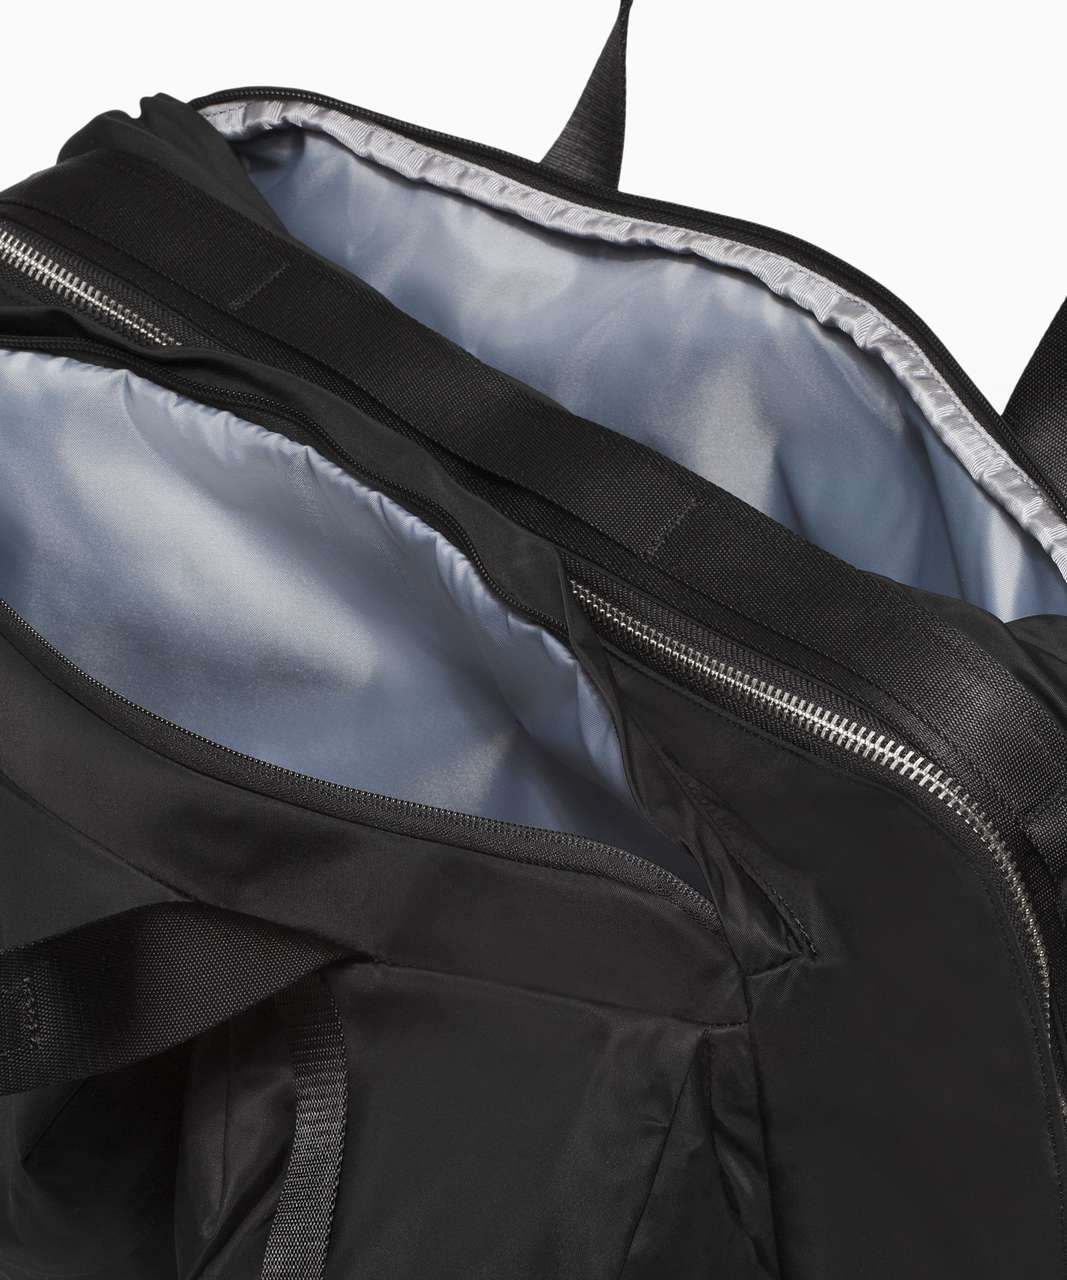 Travel bag Lululemon Grey in Polyester - 39035468